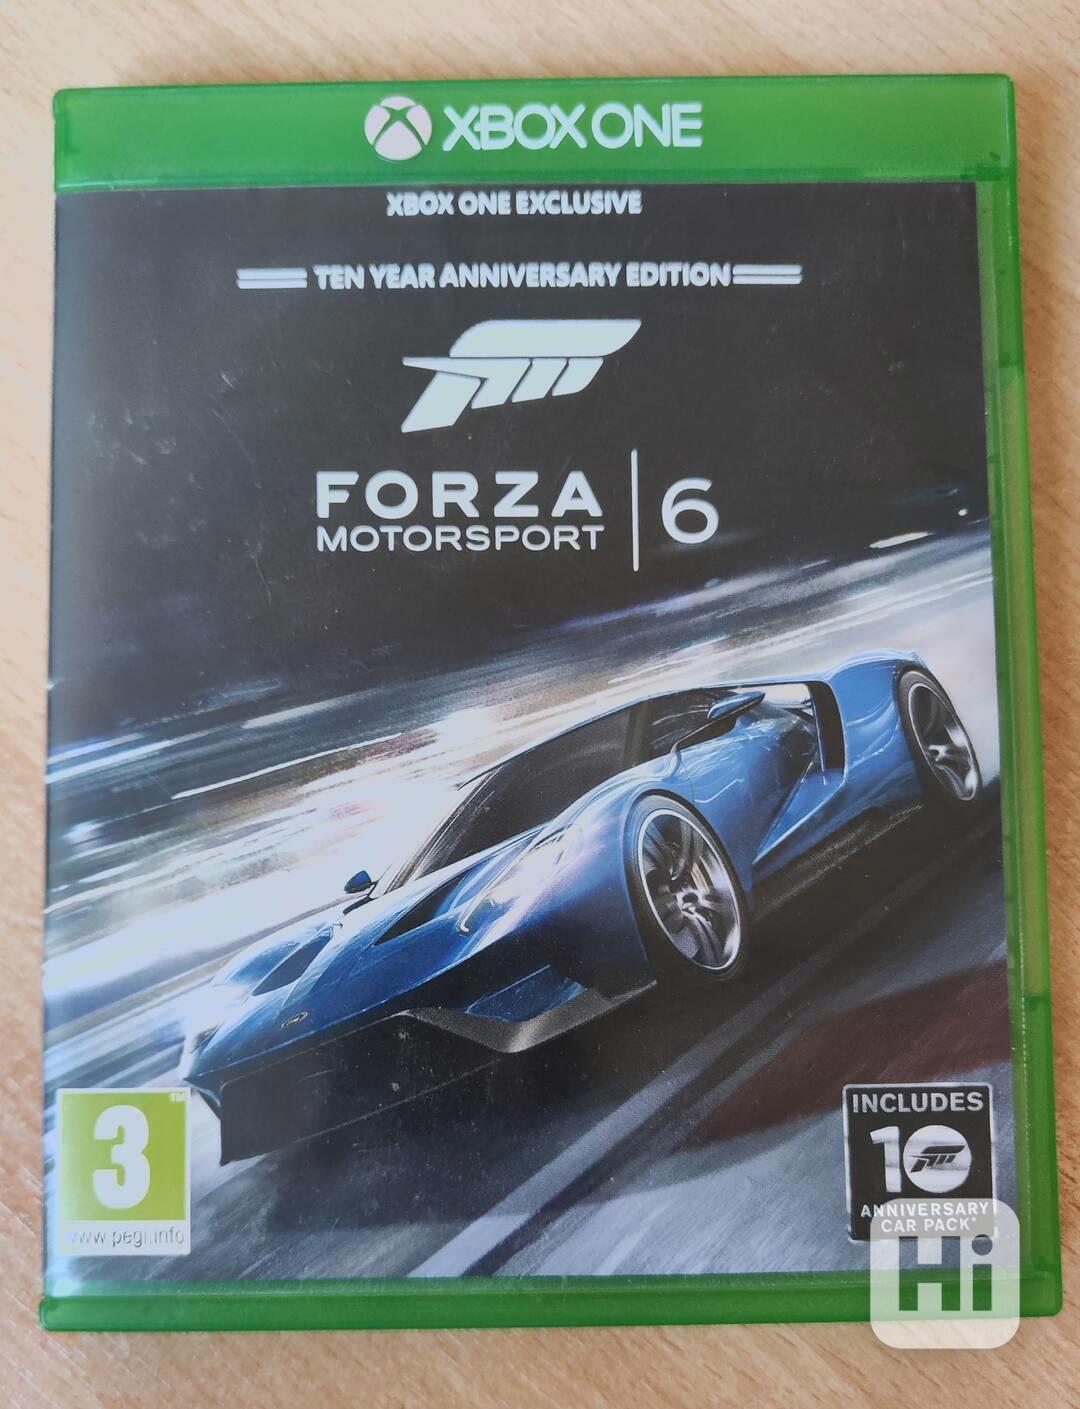  Forza 6 Motorsport na XBOX ONE